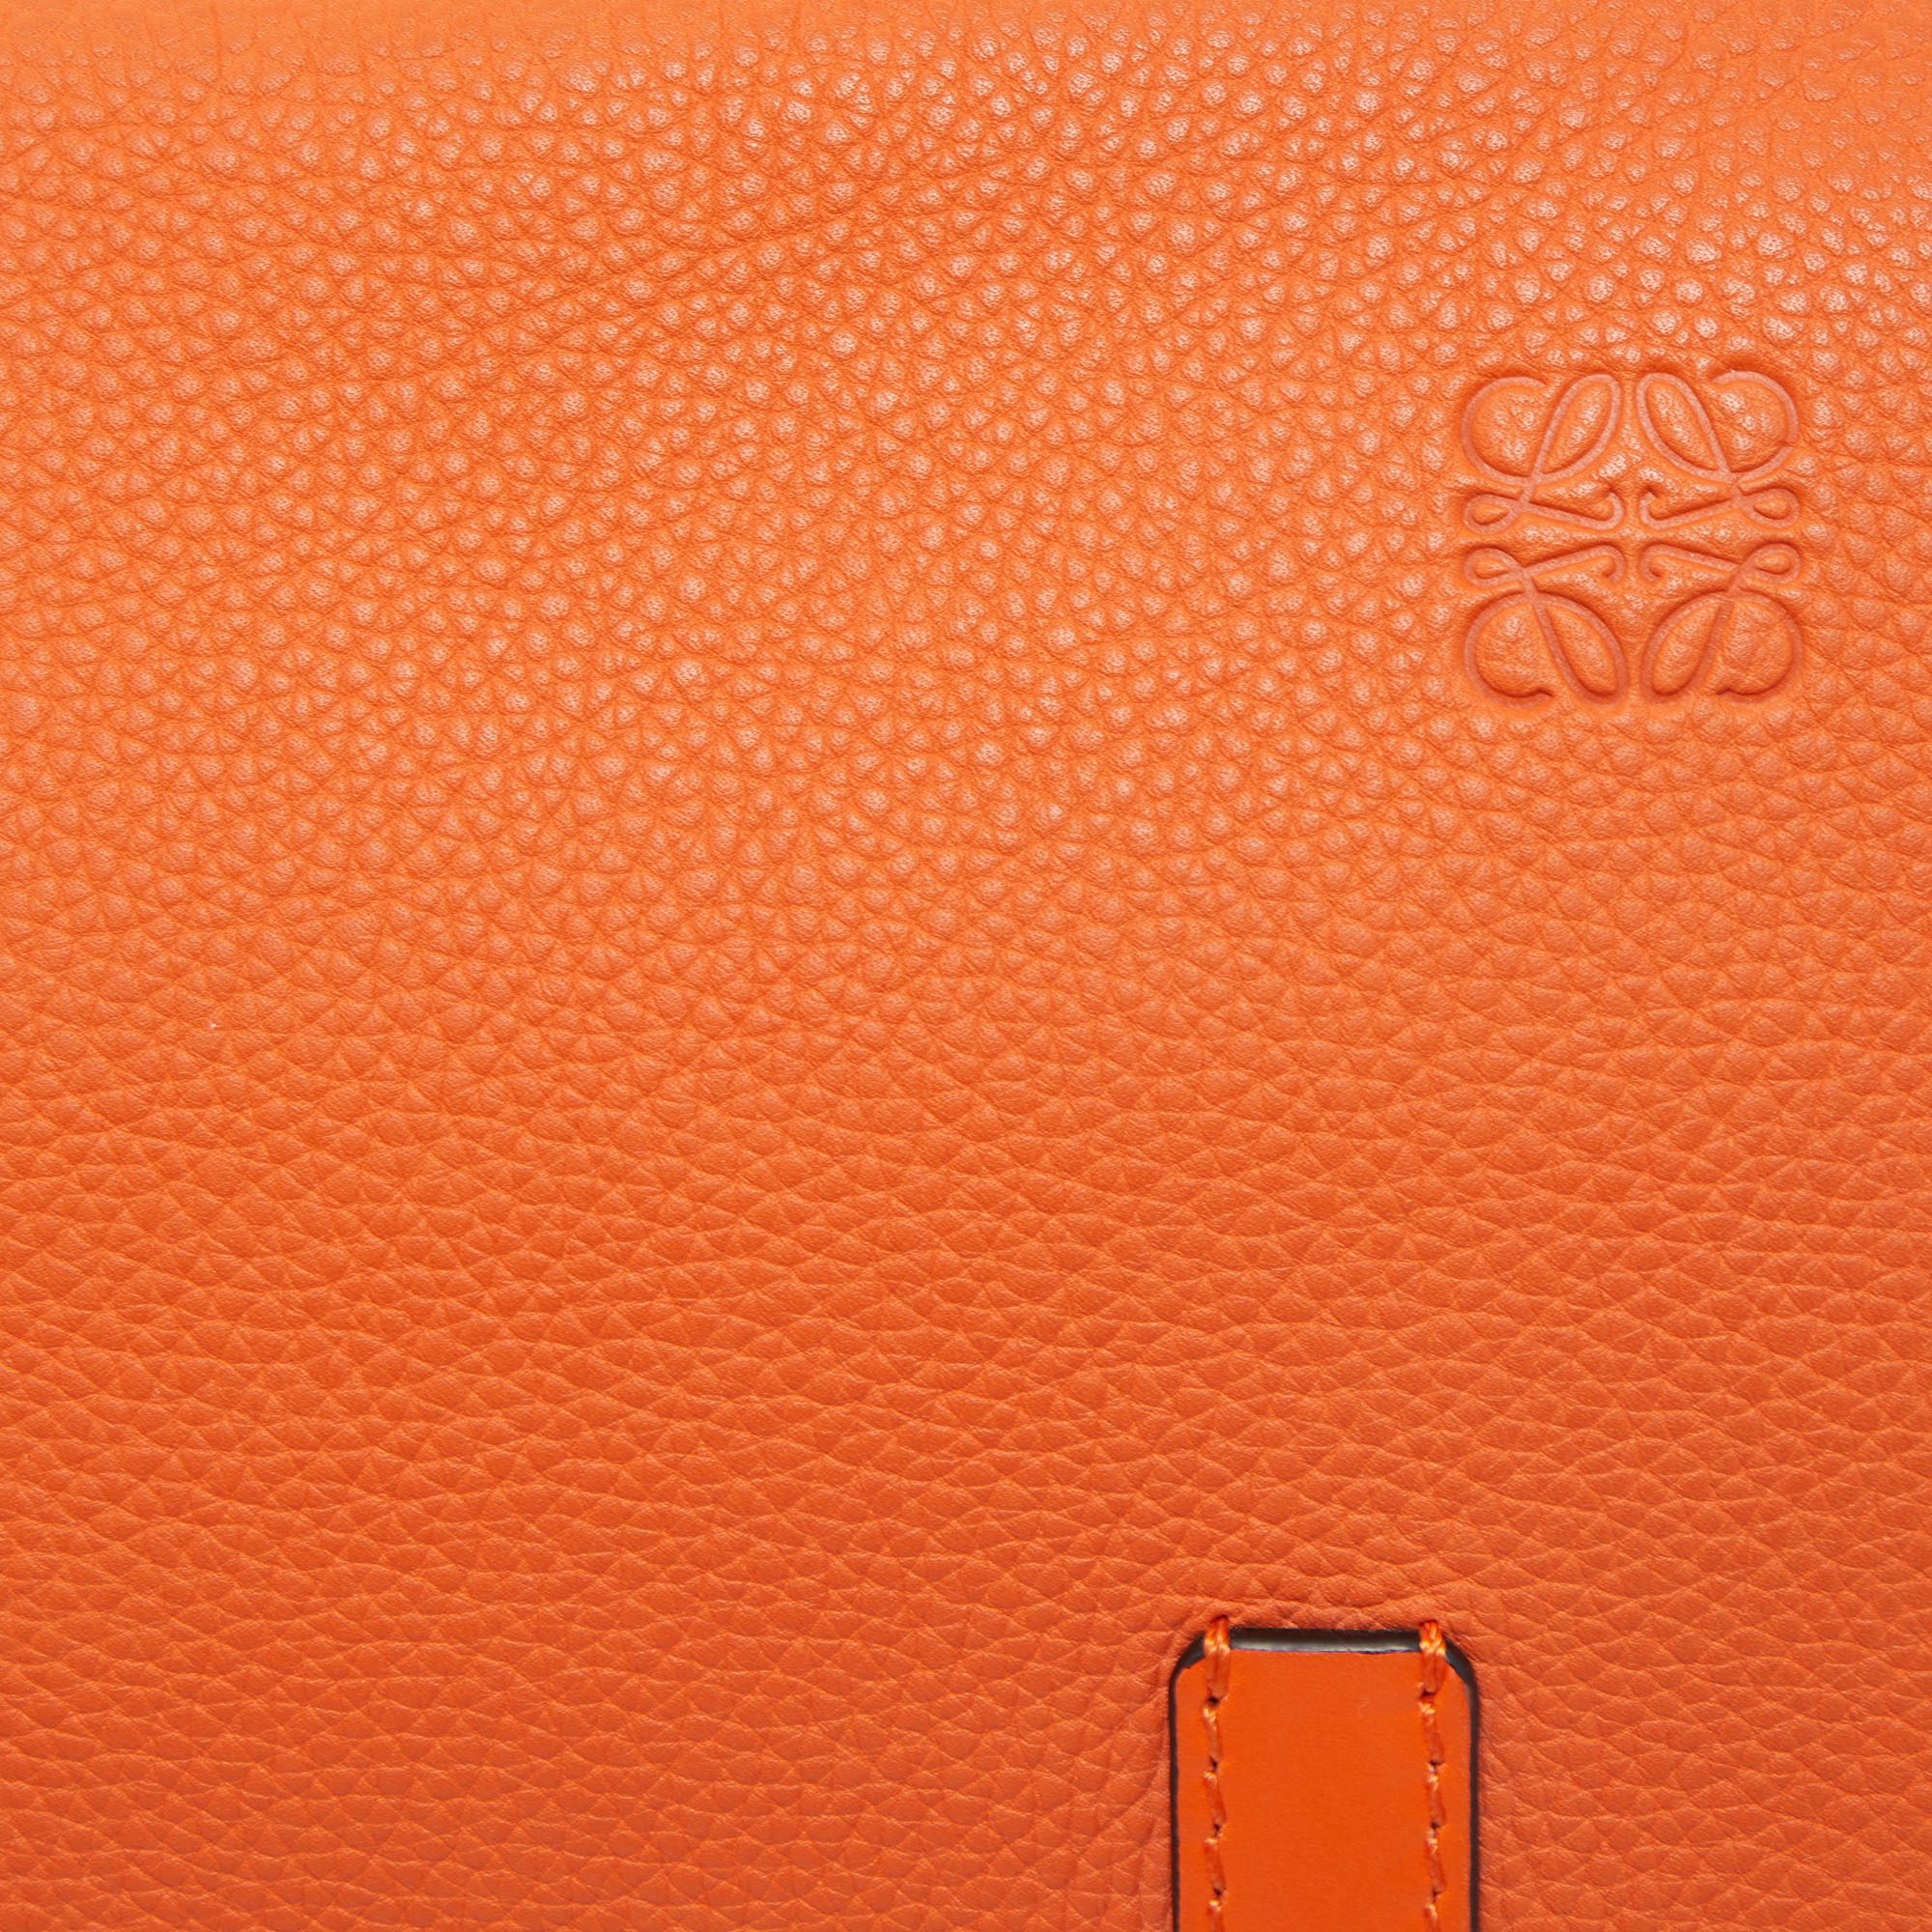 Loewe Orange/Beige Grained Leather Military Belt Bag